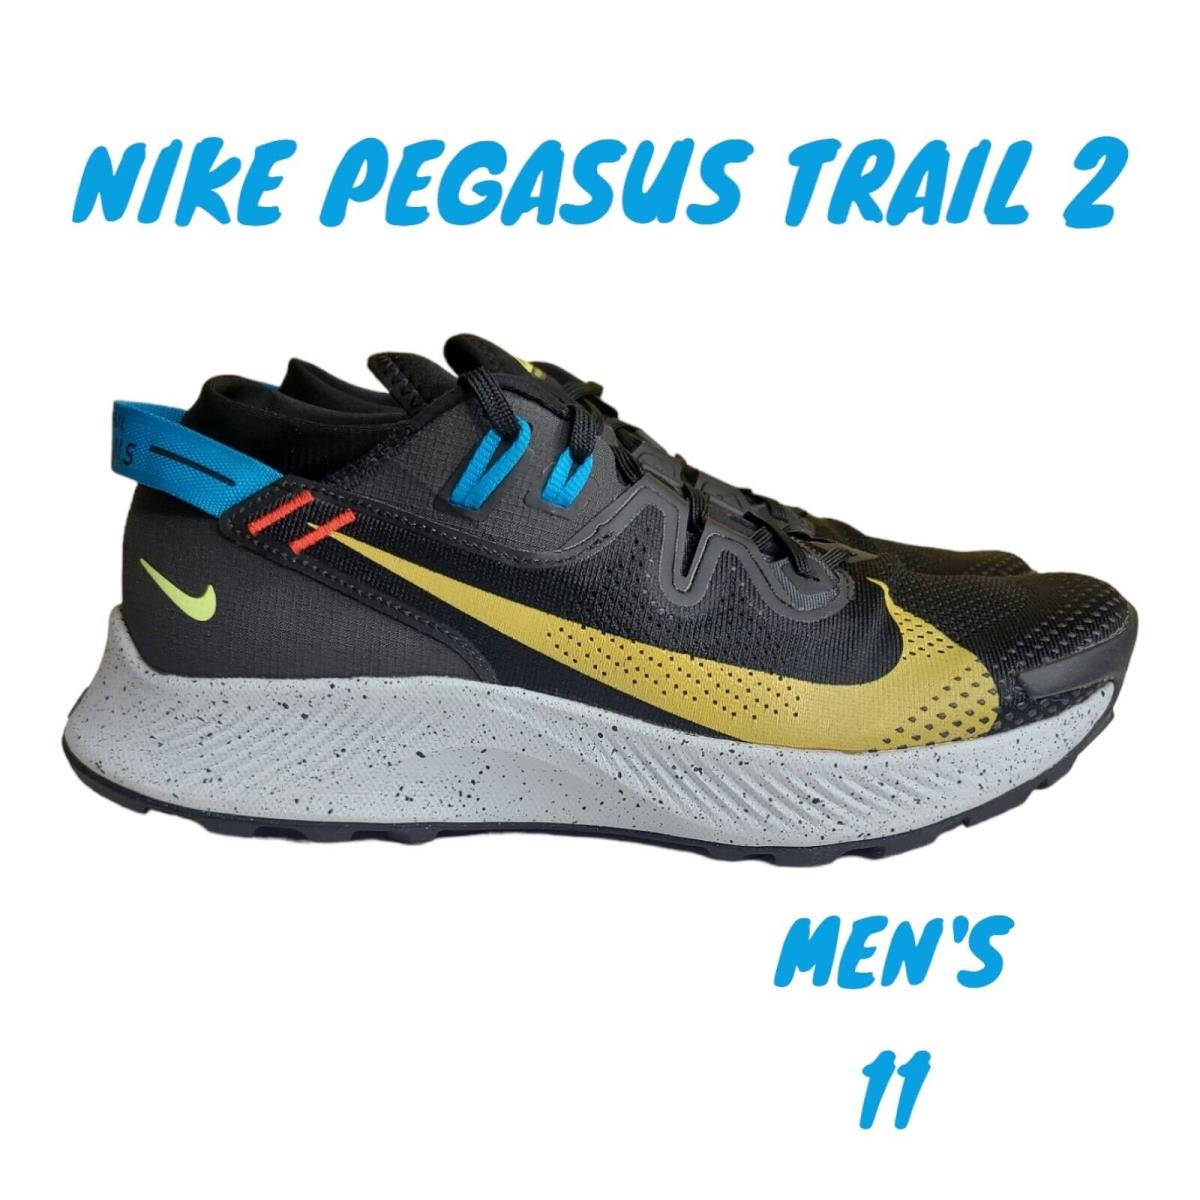 Nike Pegasus Trail 2 Shoes Men`s Size 11 Black Gold Running Sneakers - Black